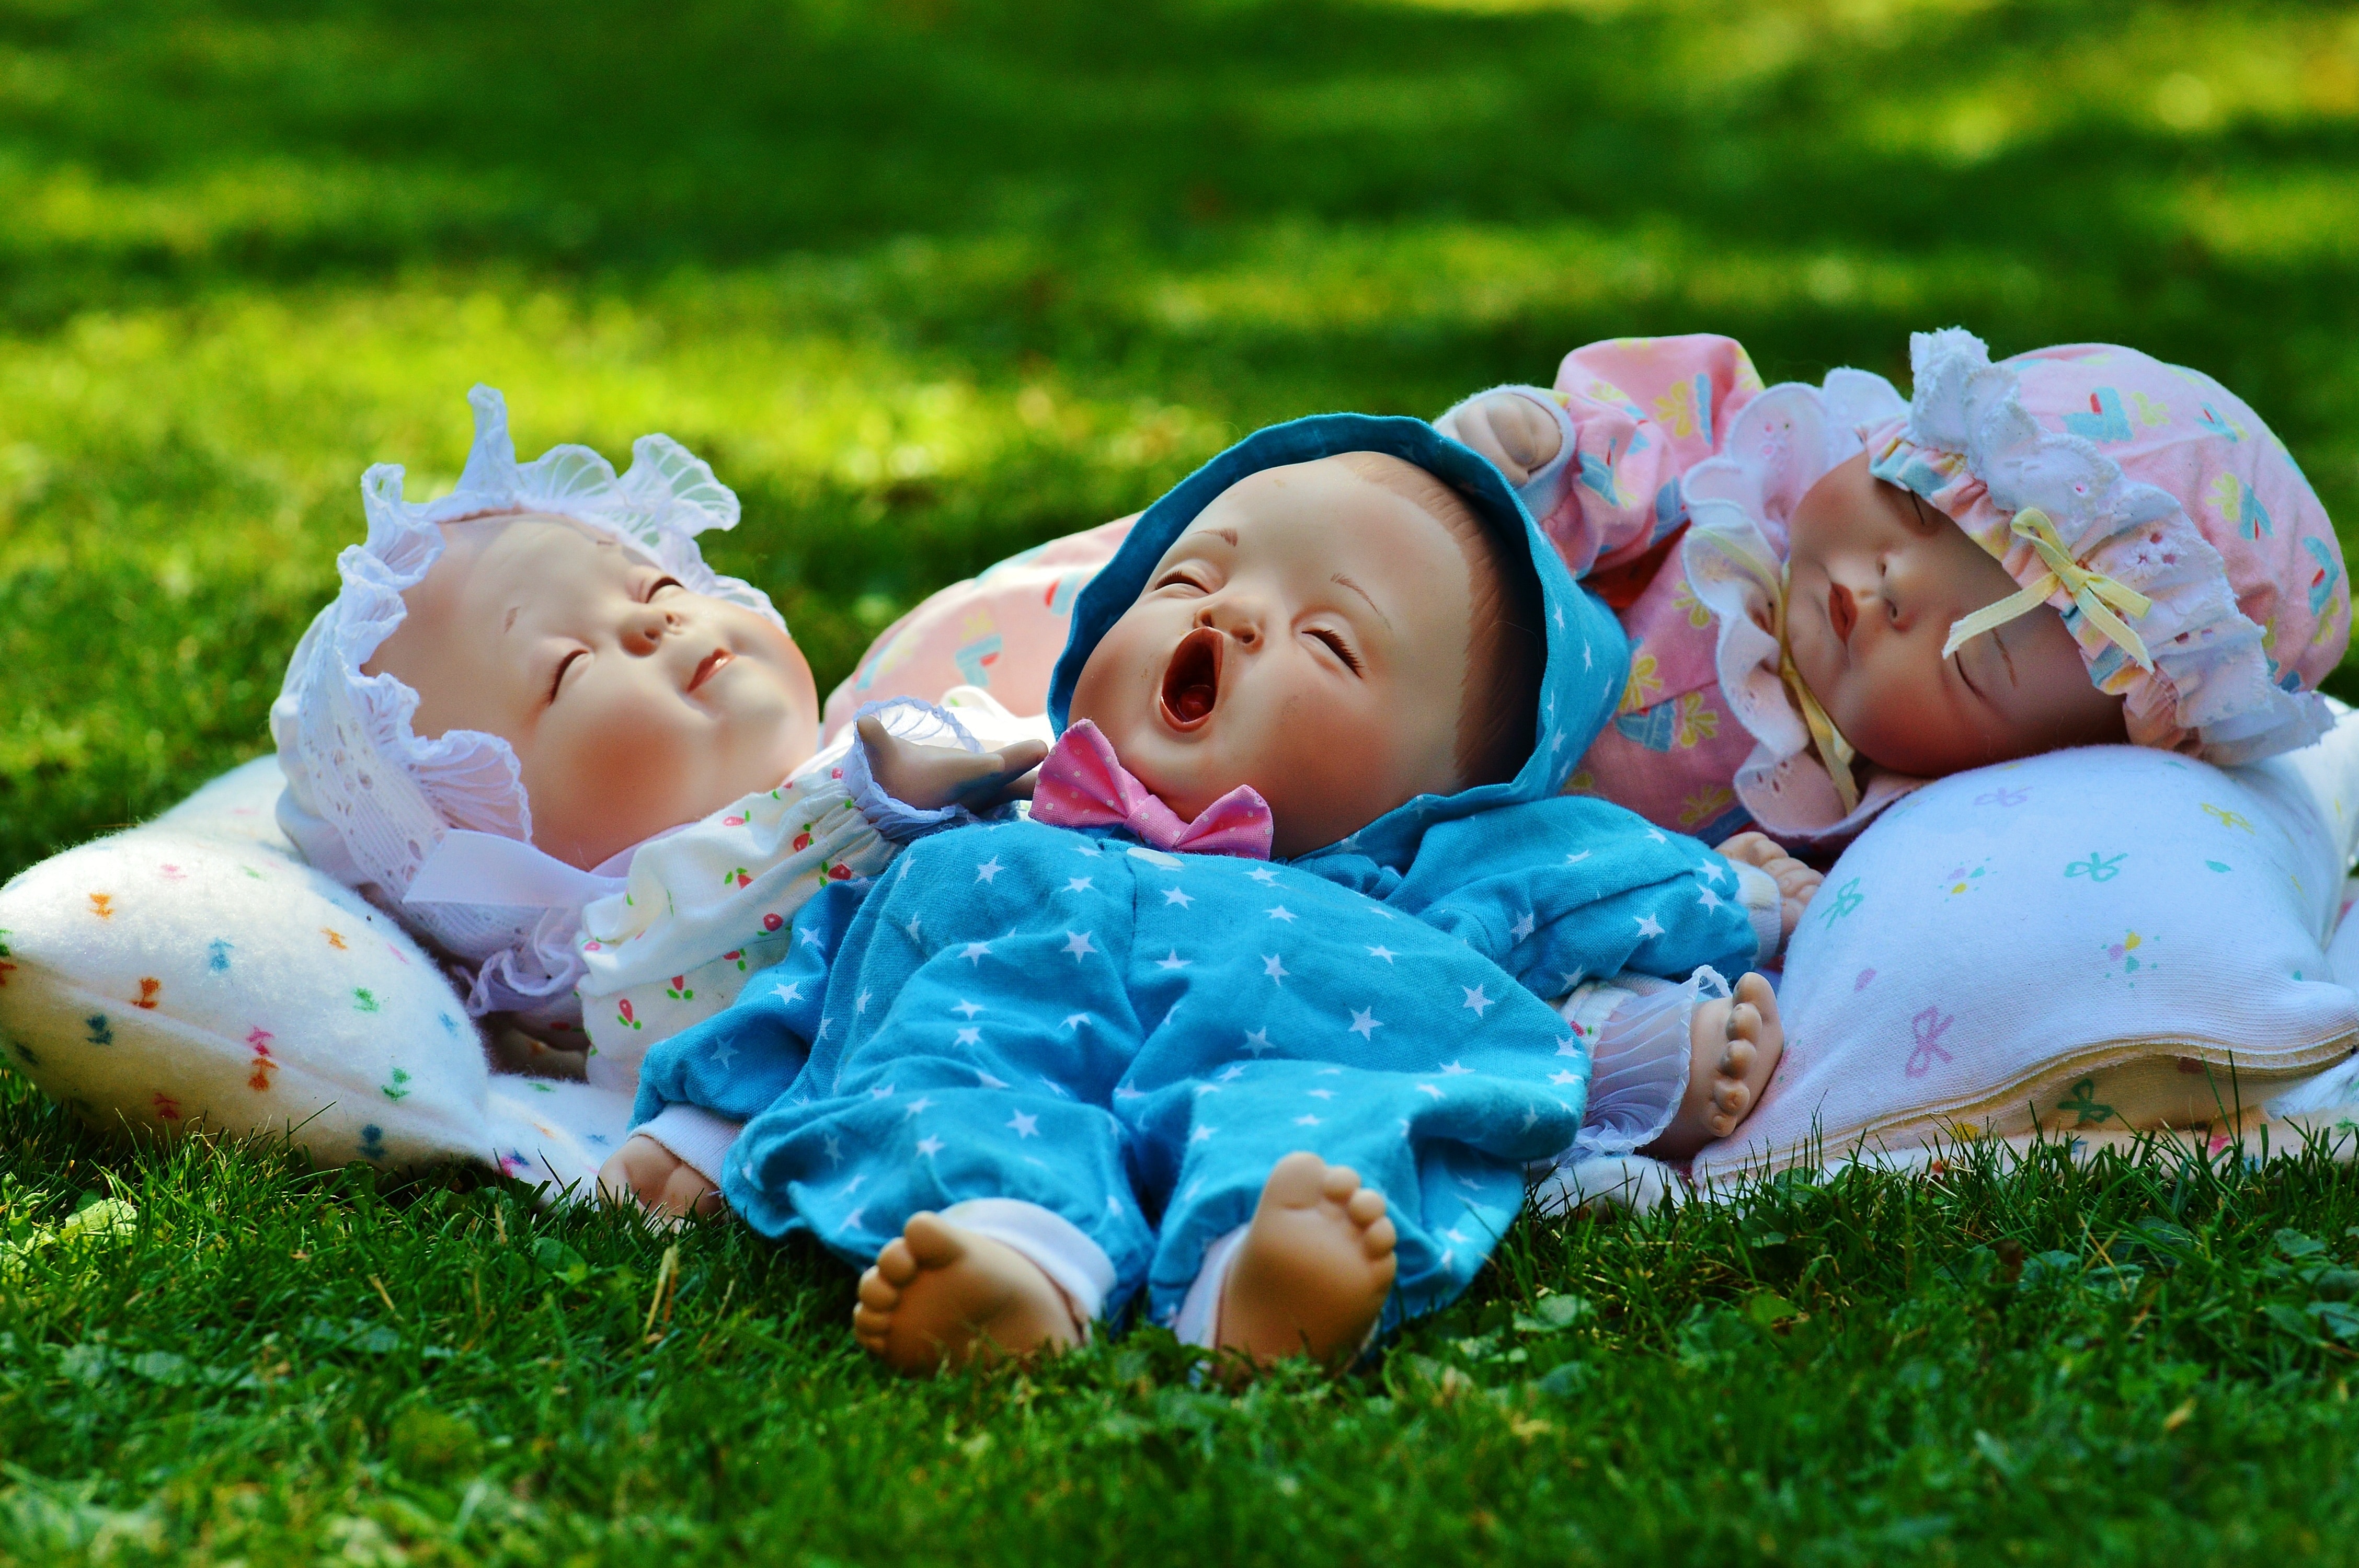 Eyes Closed, Babies, Three, Sleep, grass, lying down